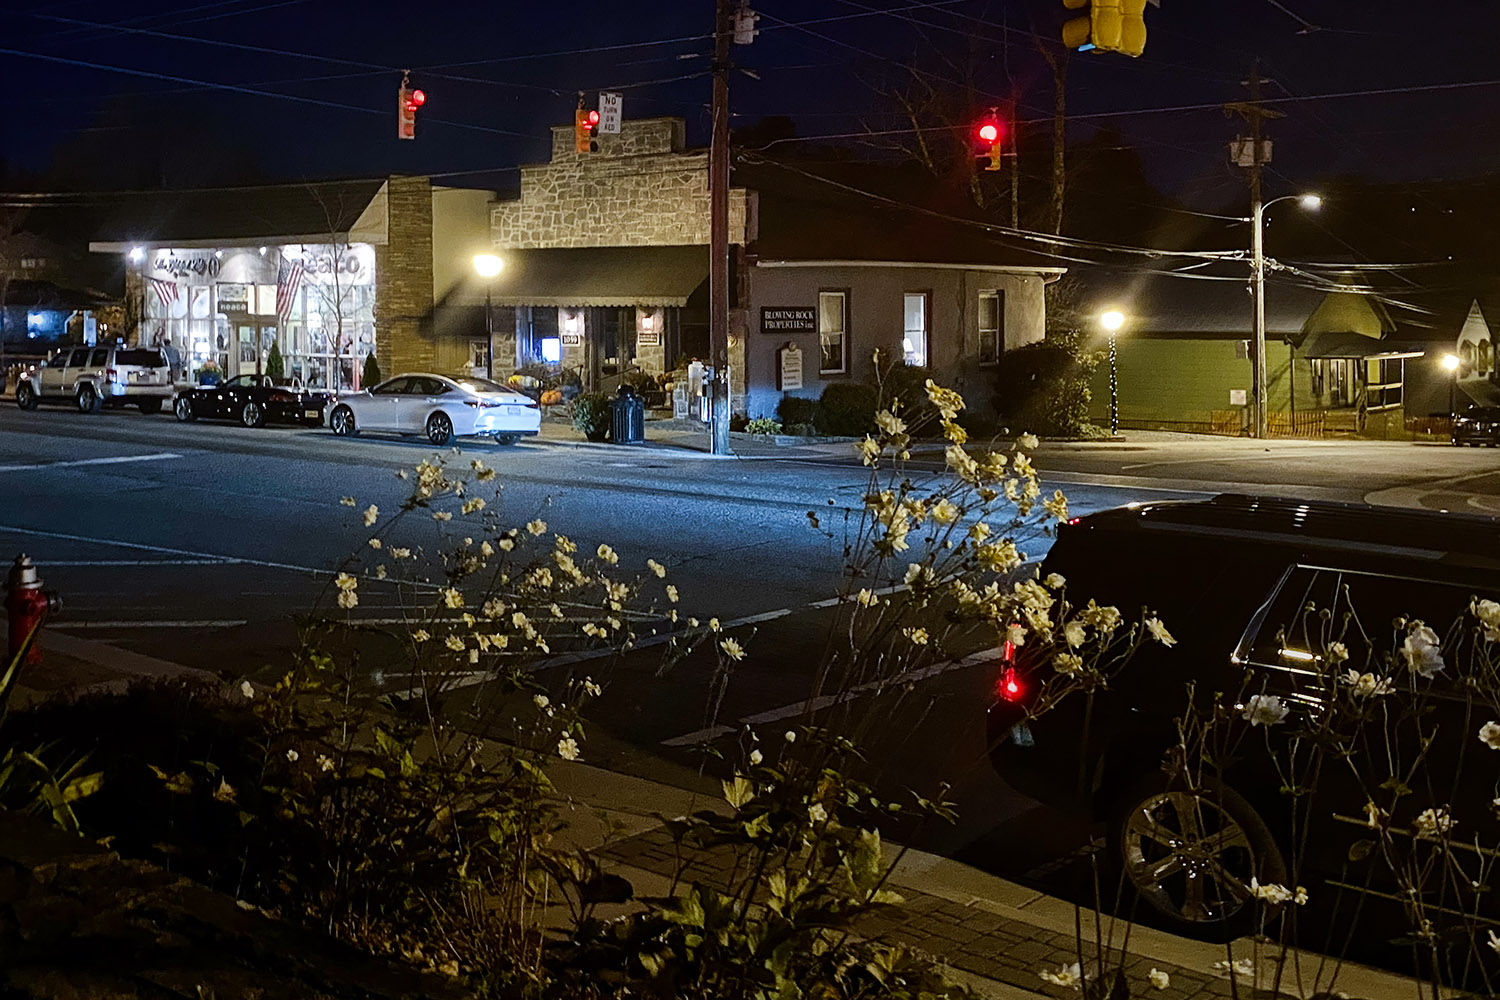 At 7:25 p.m. night has fallen on Blowing Rock's Main Street